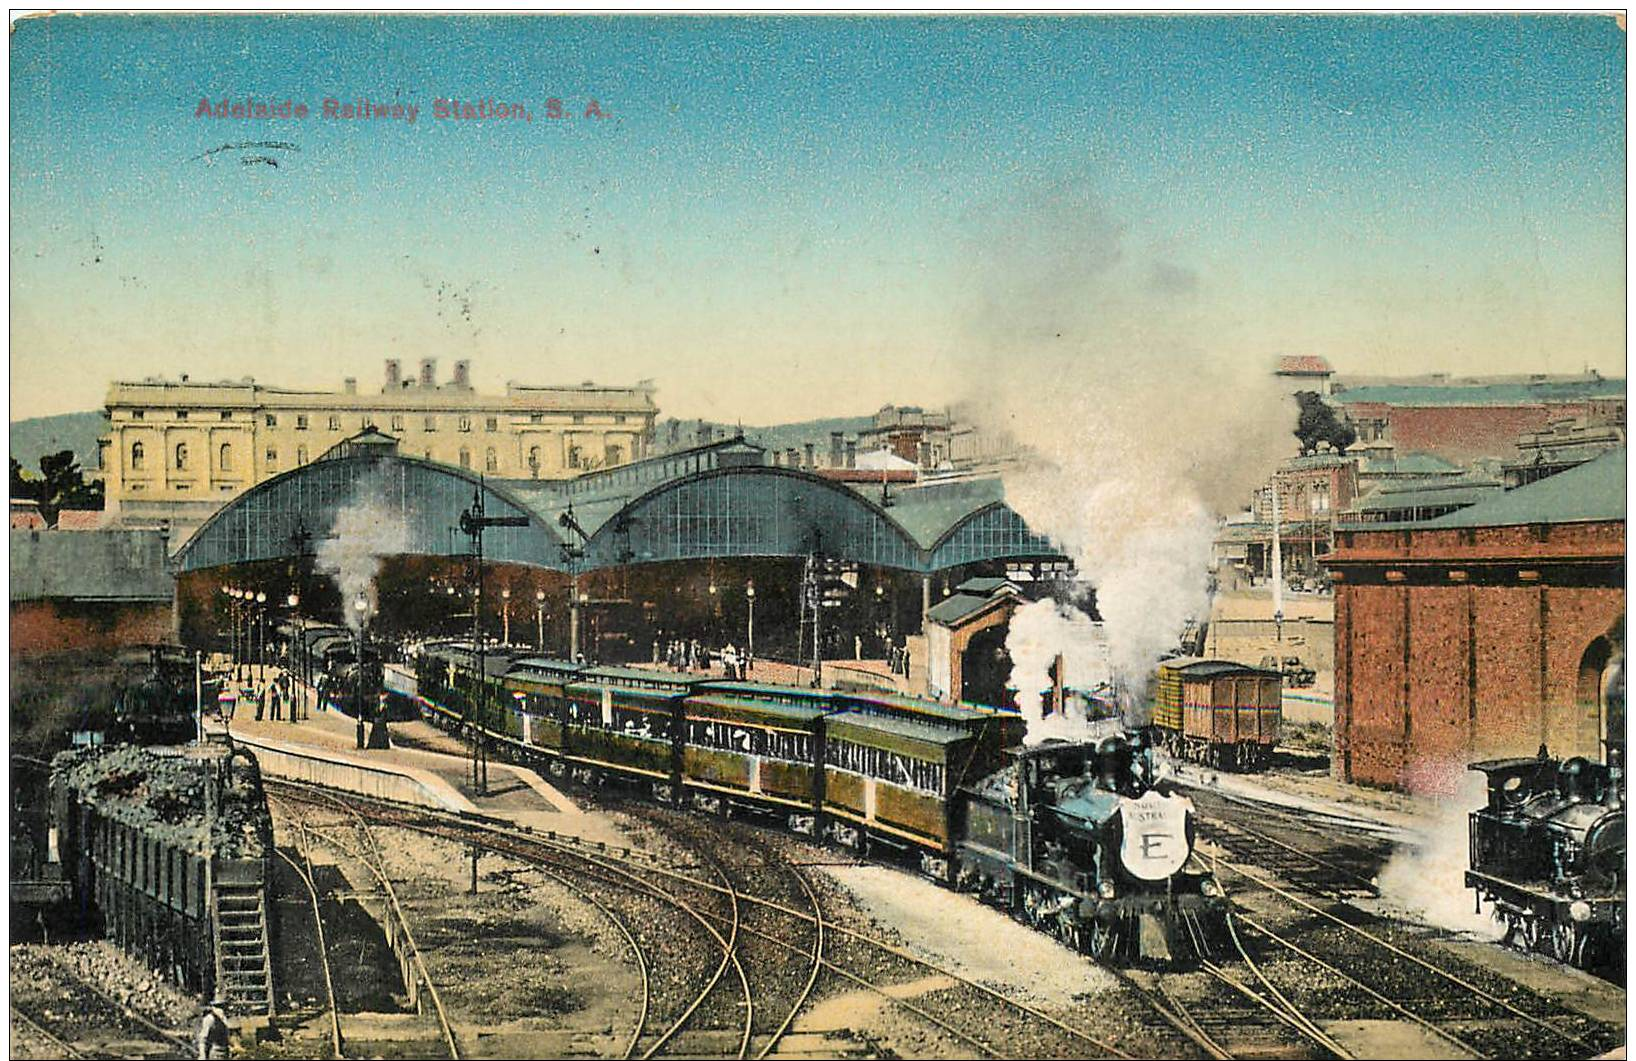 AUSTRALIA - ADELAIDE RAILWAY STATION, S.A. - PM 1912 - LOCOMOTIVE 